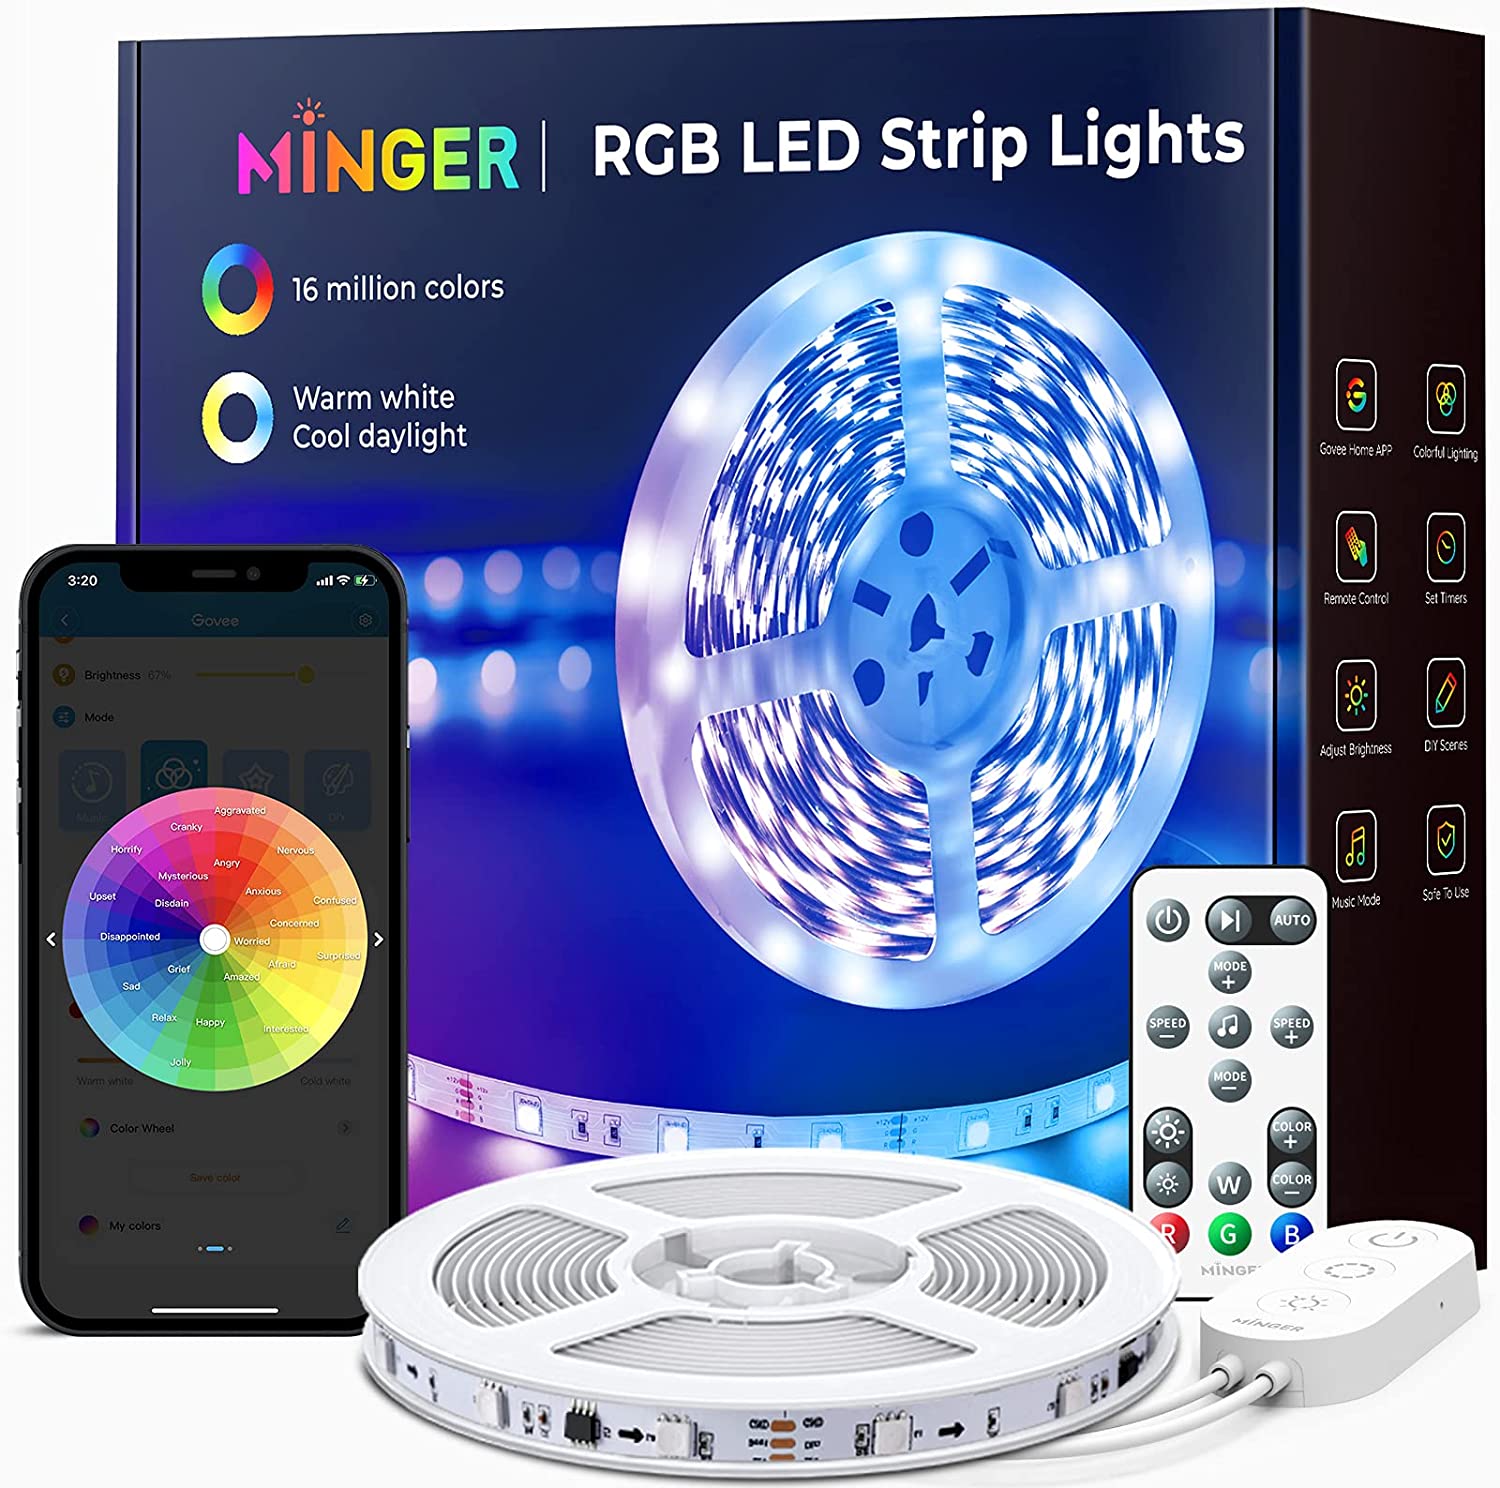 MINGER Dimmable White LED Strip Lights, 16.4-Foot